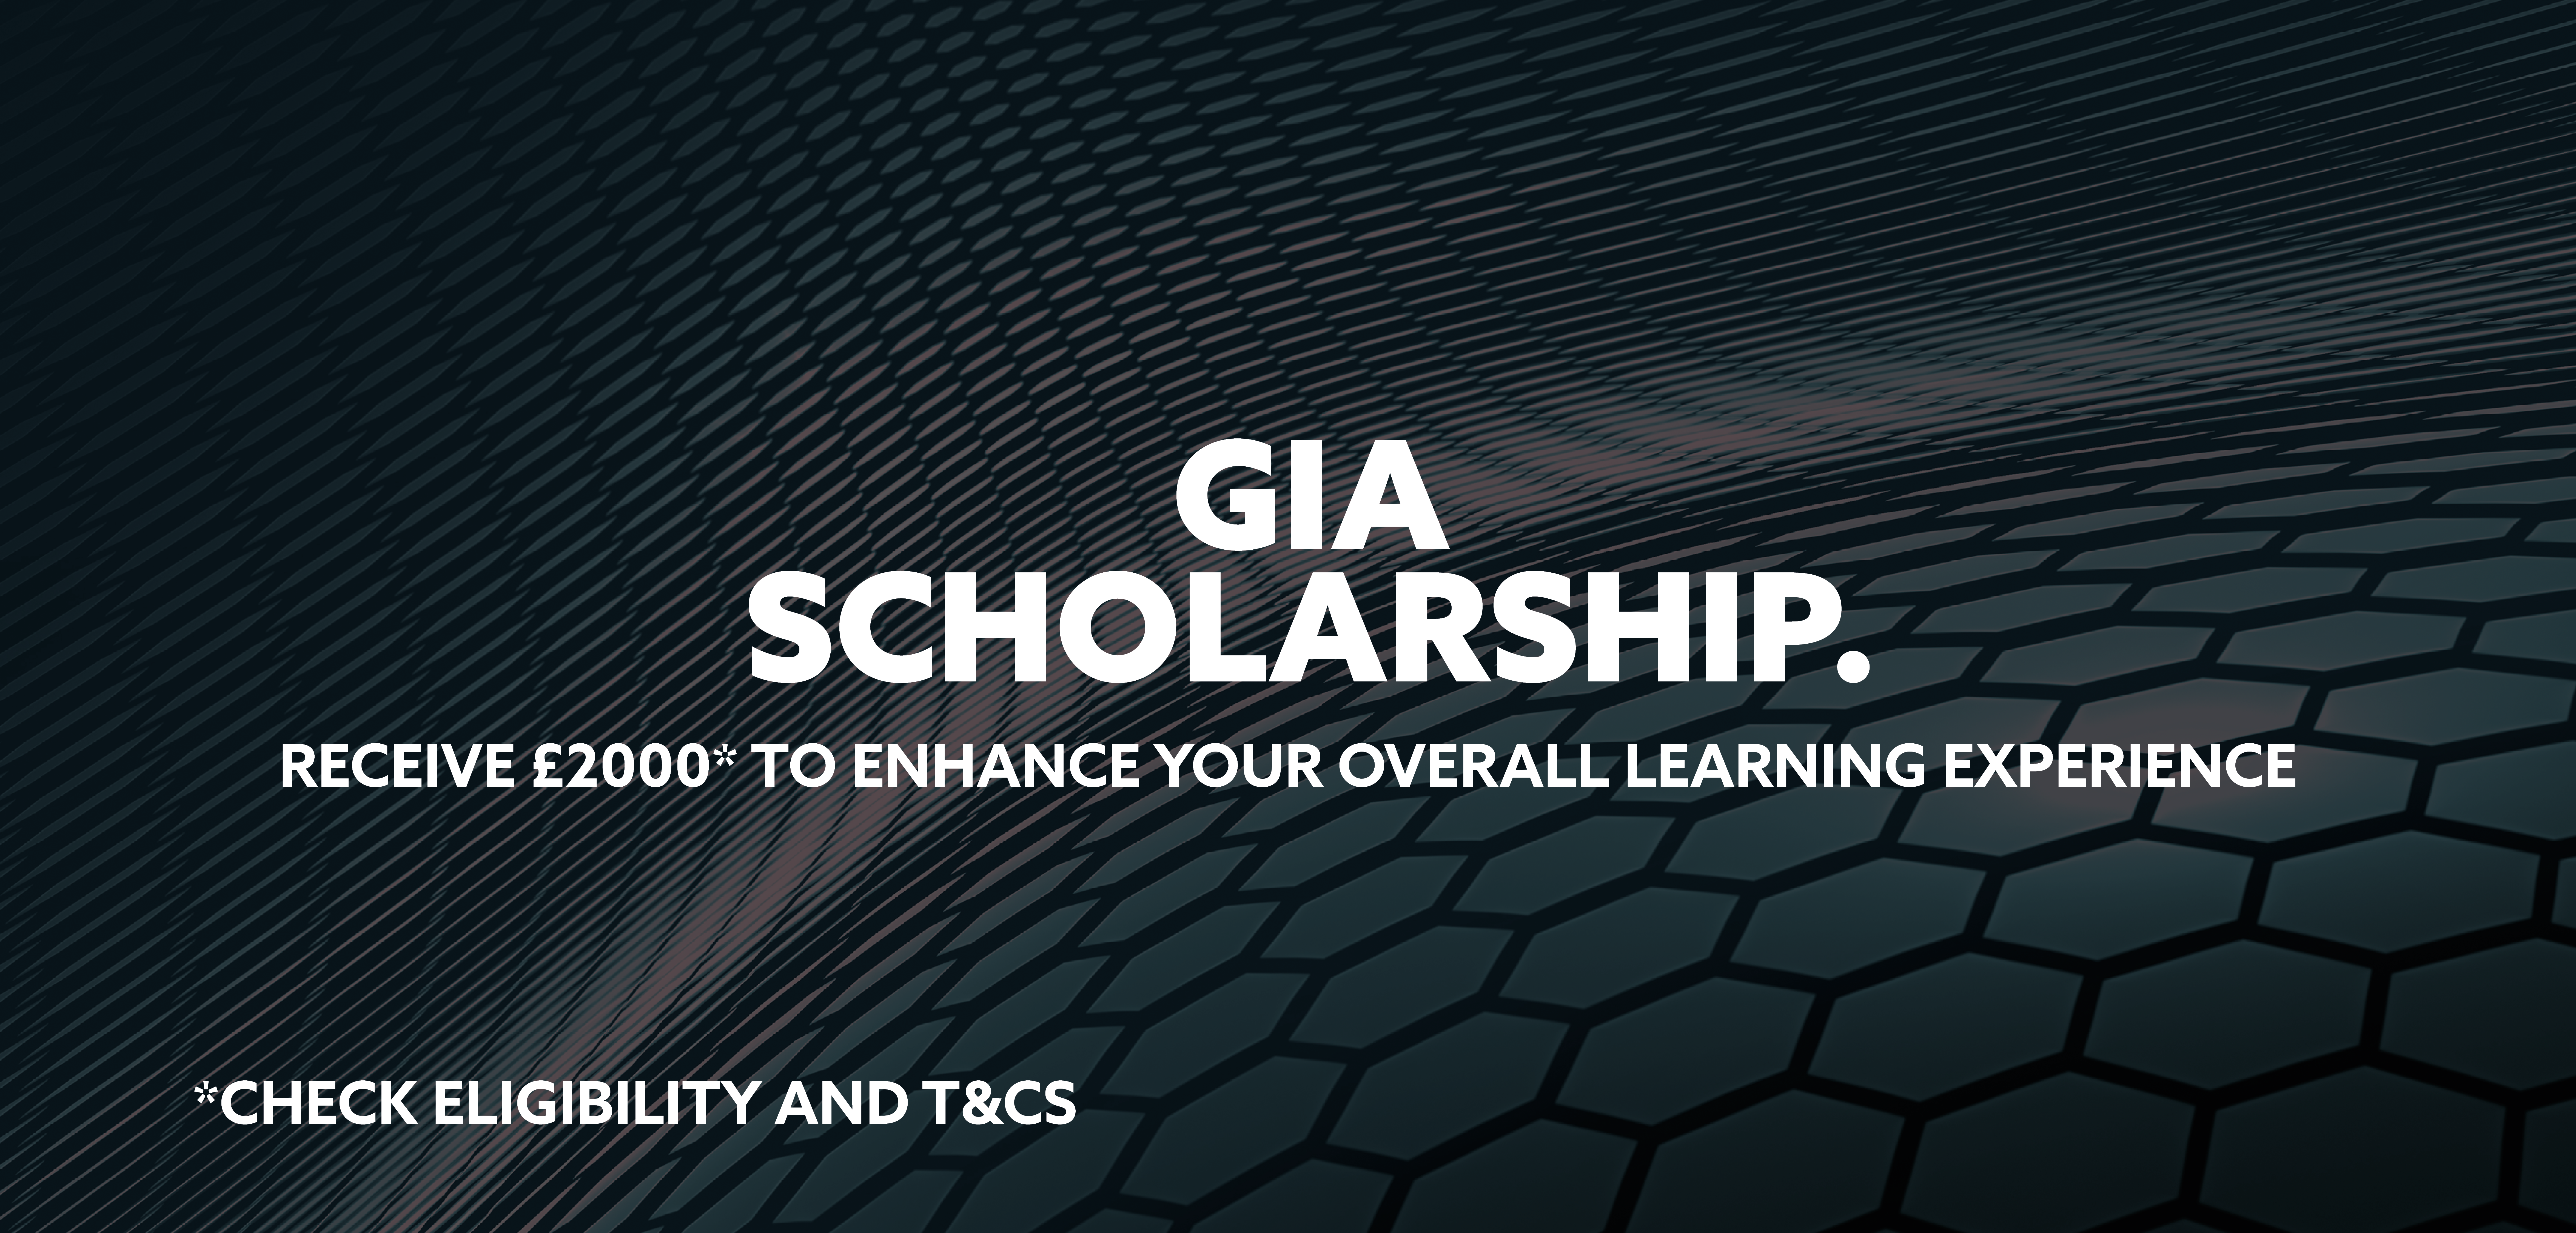 GIA Scholarship - abstract image